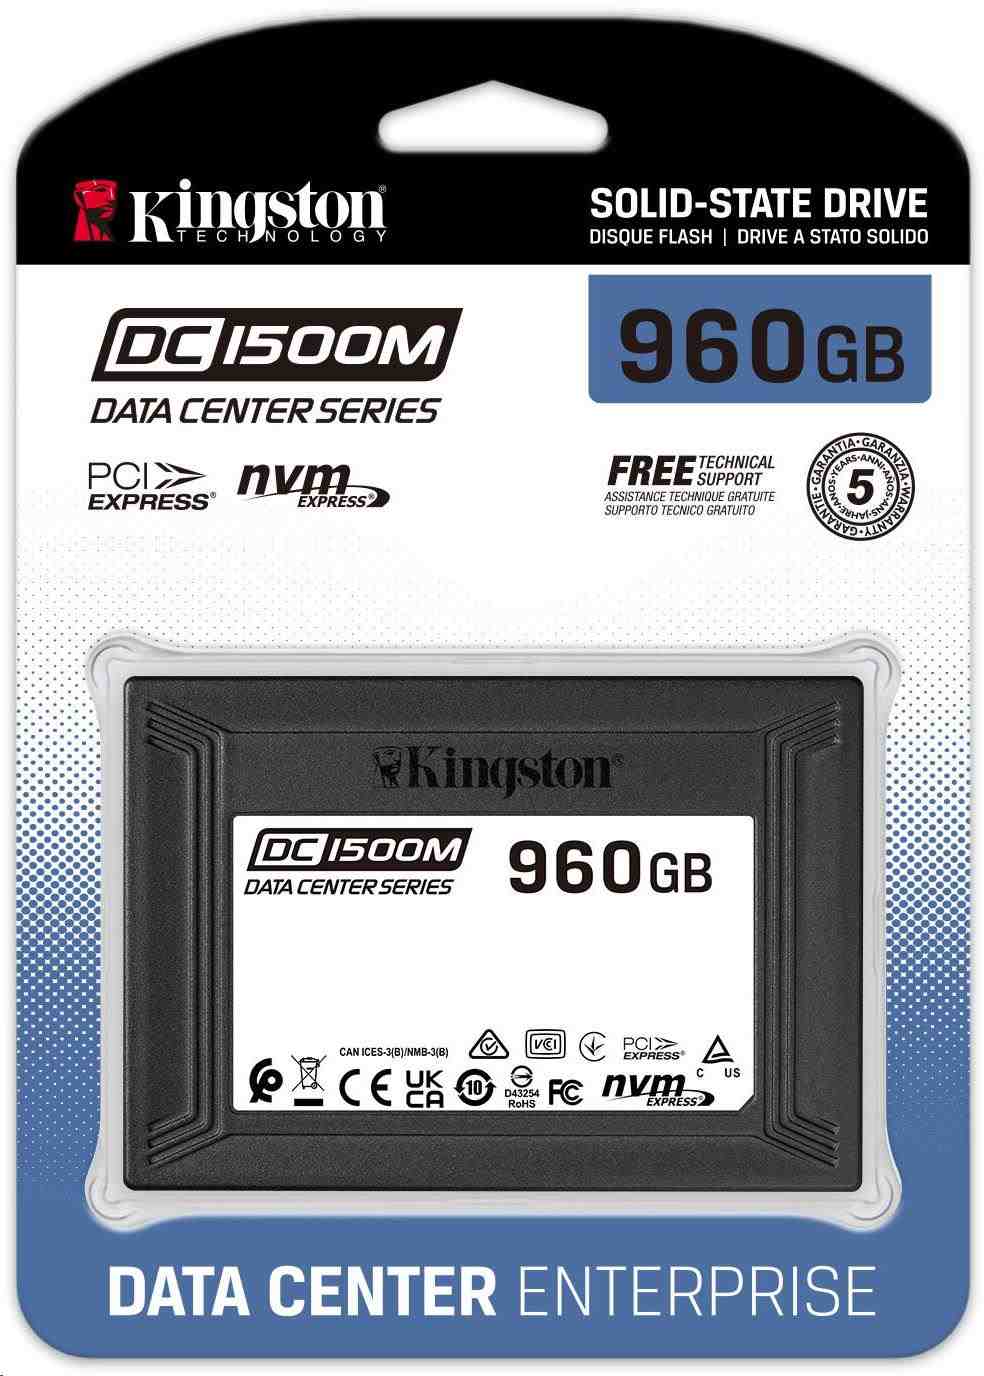 Kingston SSD 960GB SSD Data Centre DC1500M (Mixed Use) Enterprise U.2 podnikové disky SSD NVMe2 